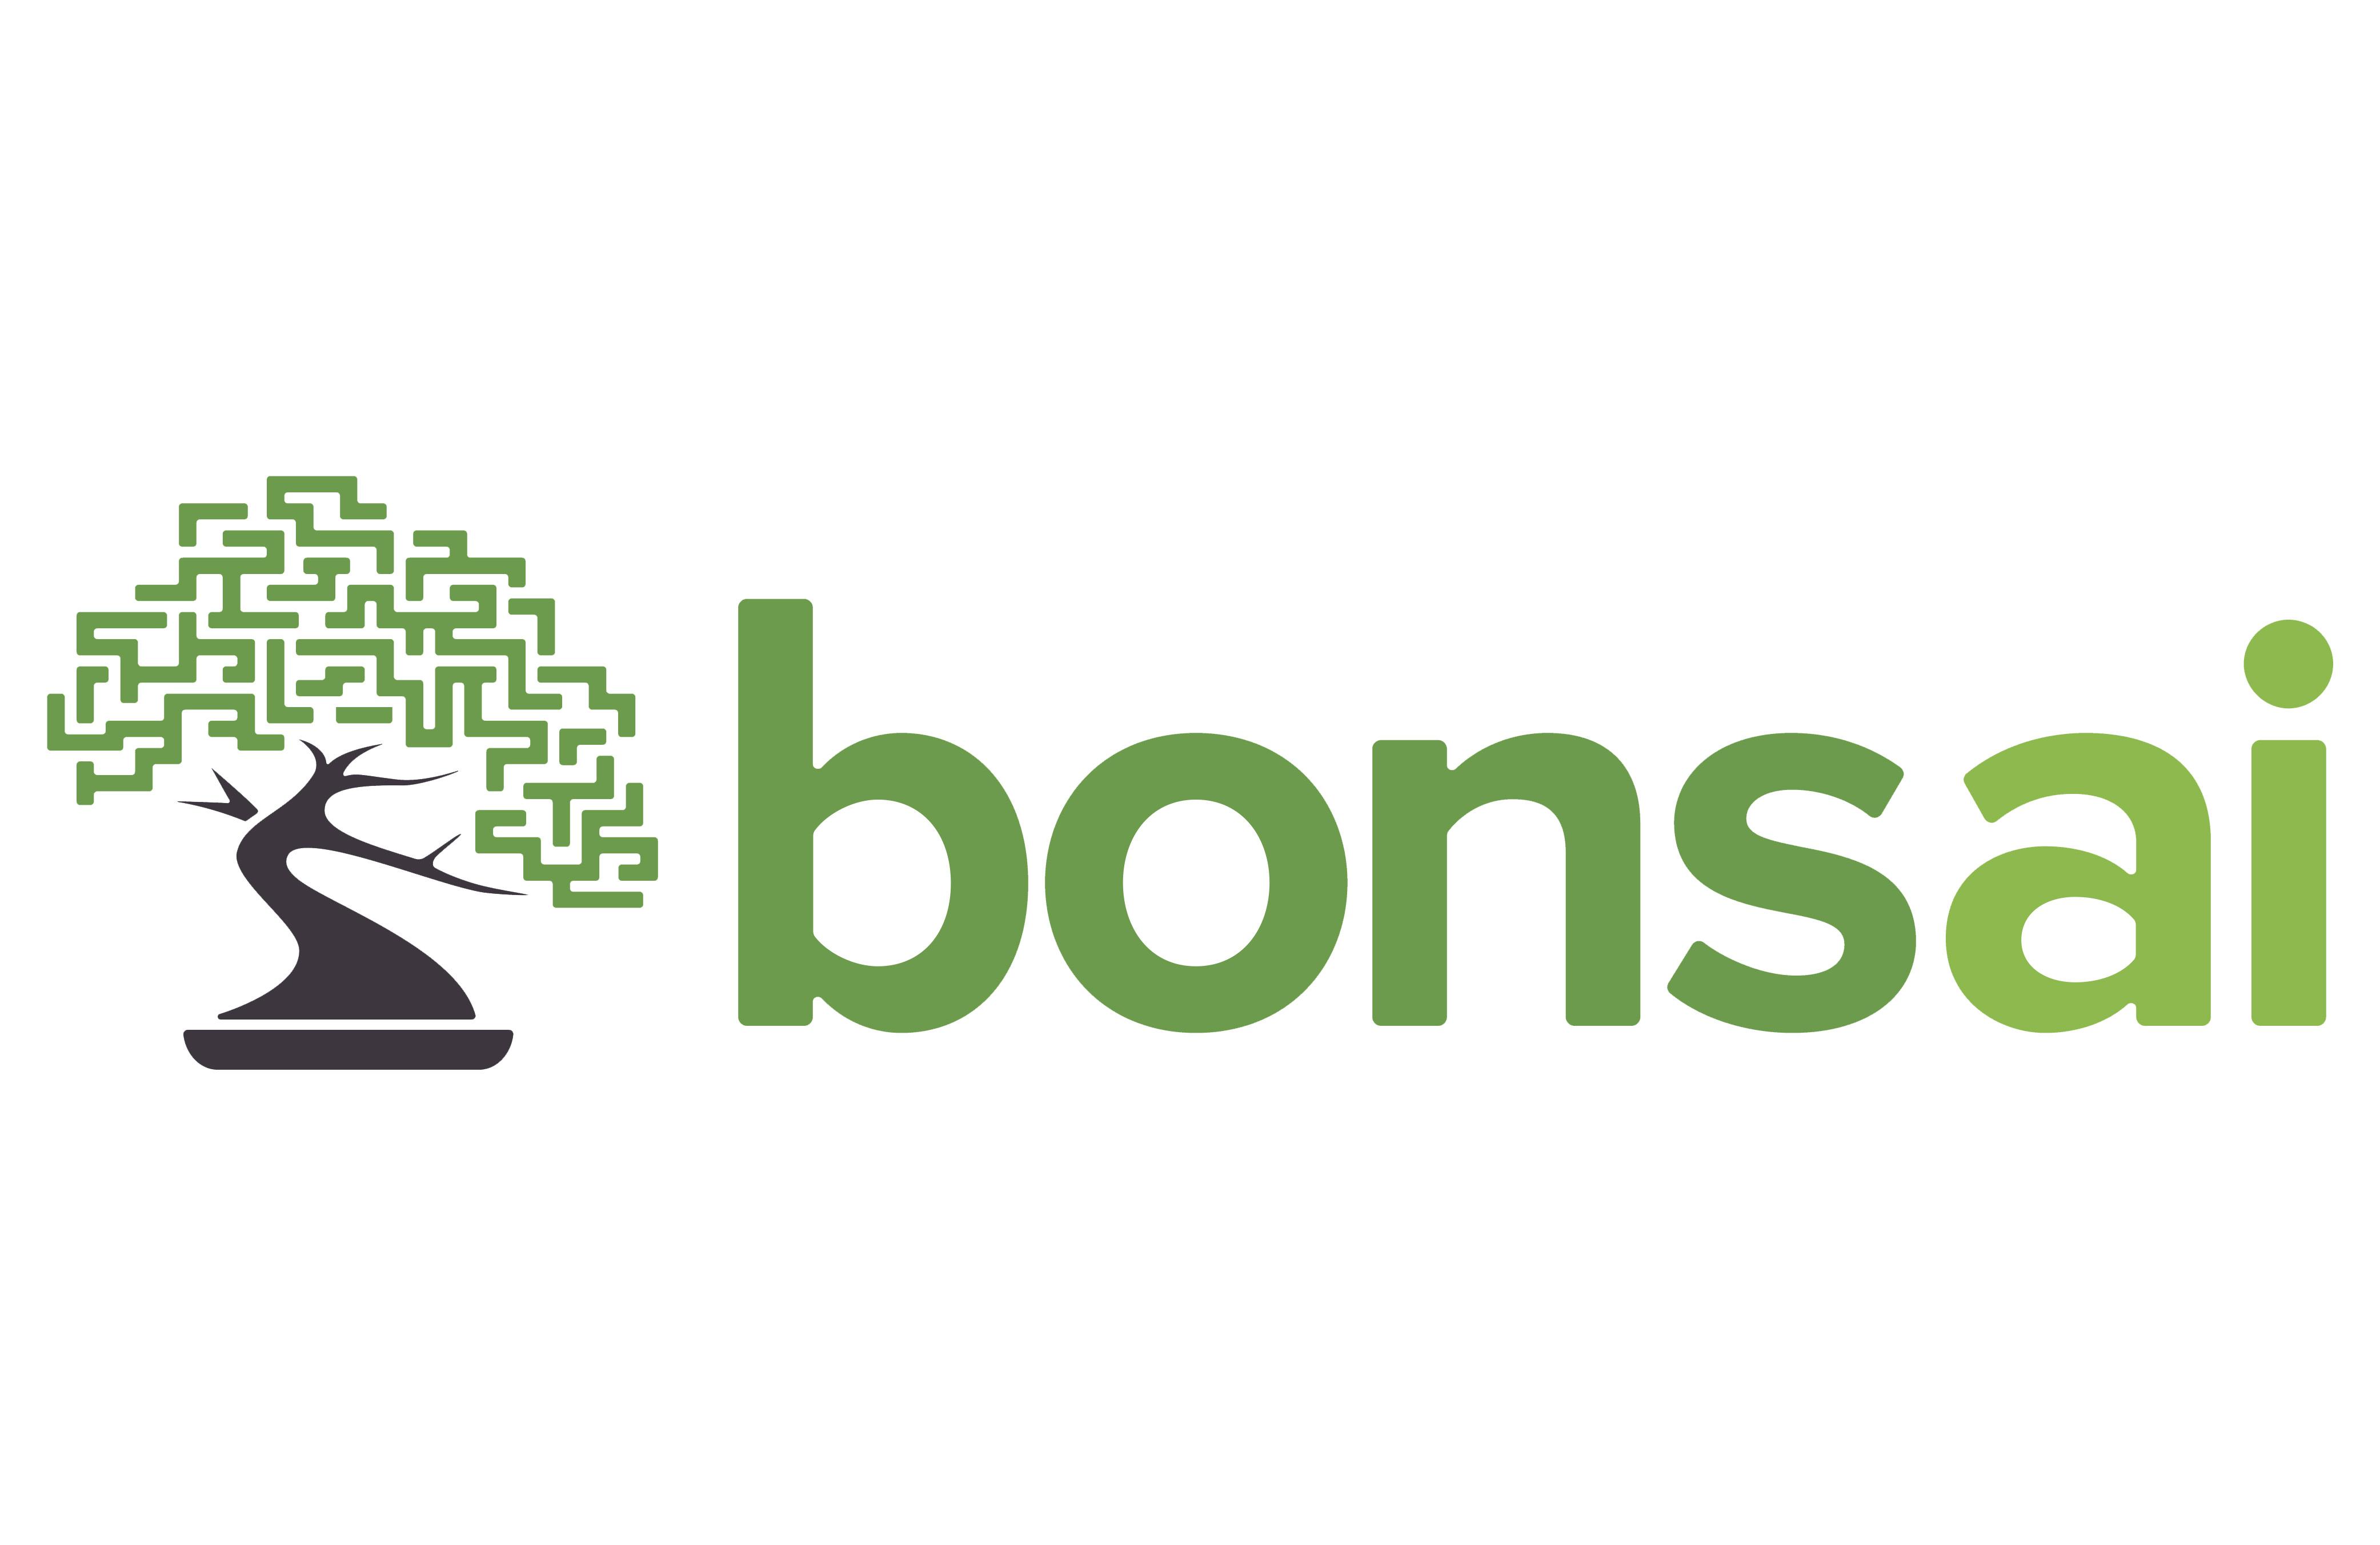 Bonsai Logo - Bonsai claims AI concept networking technique helps robot work 45X ...